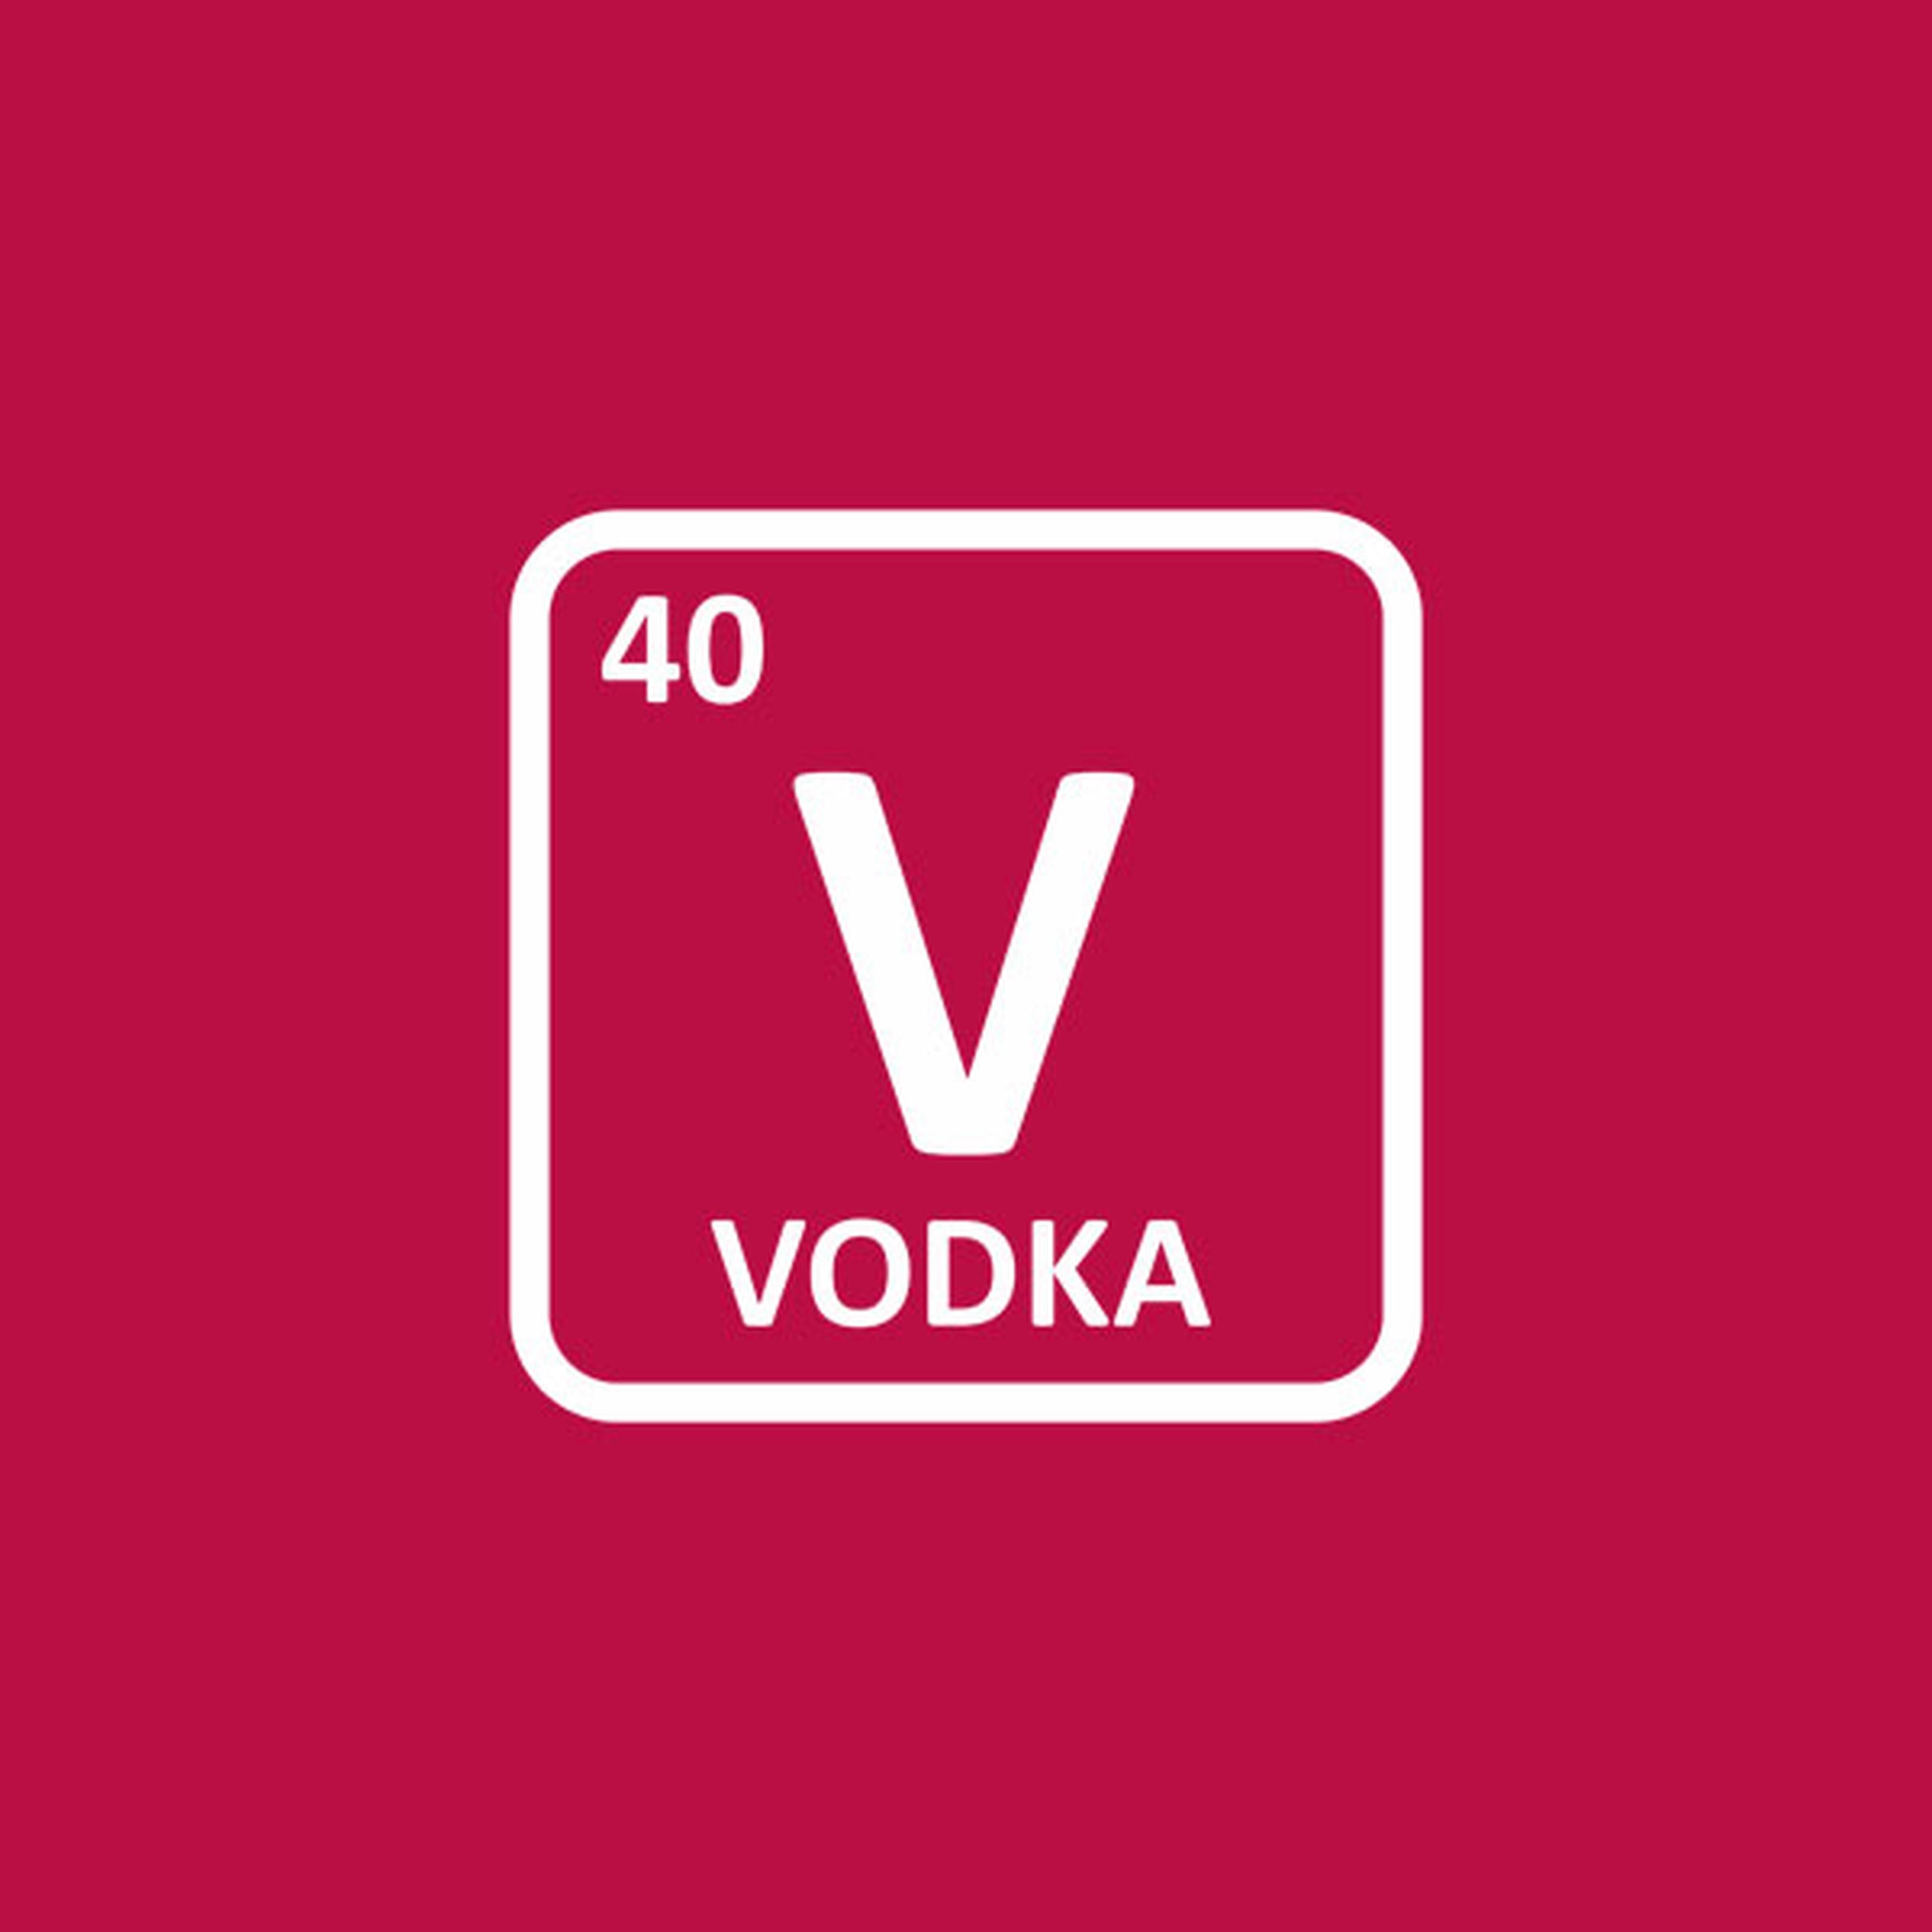 The element of Vodka - T-shirt